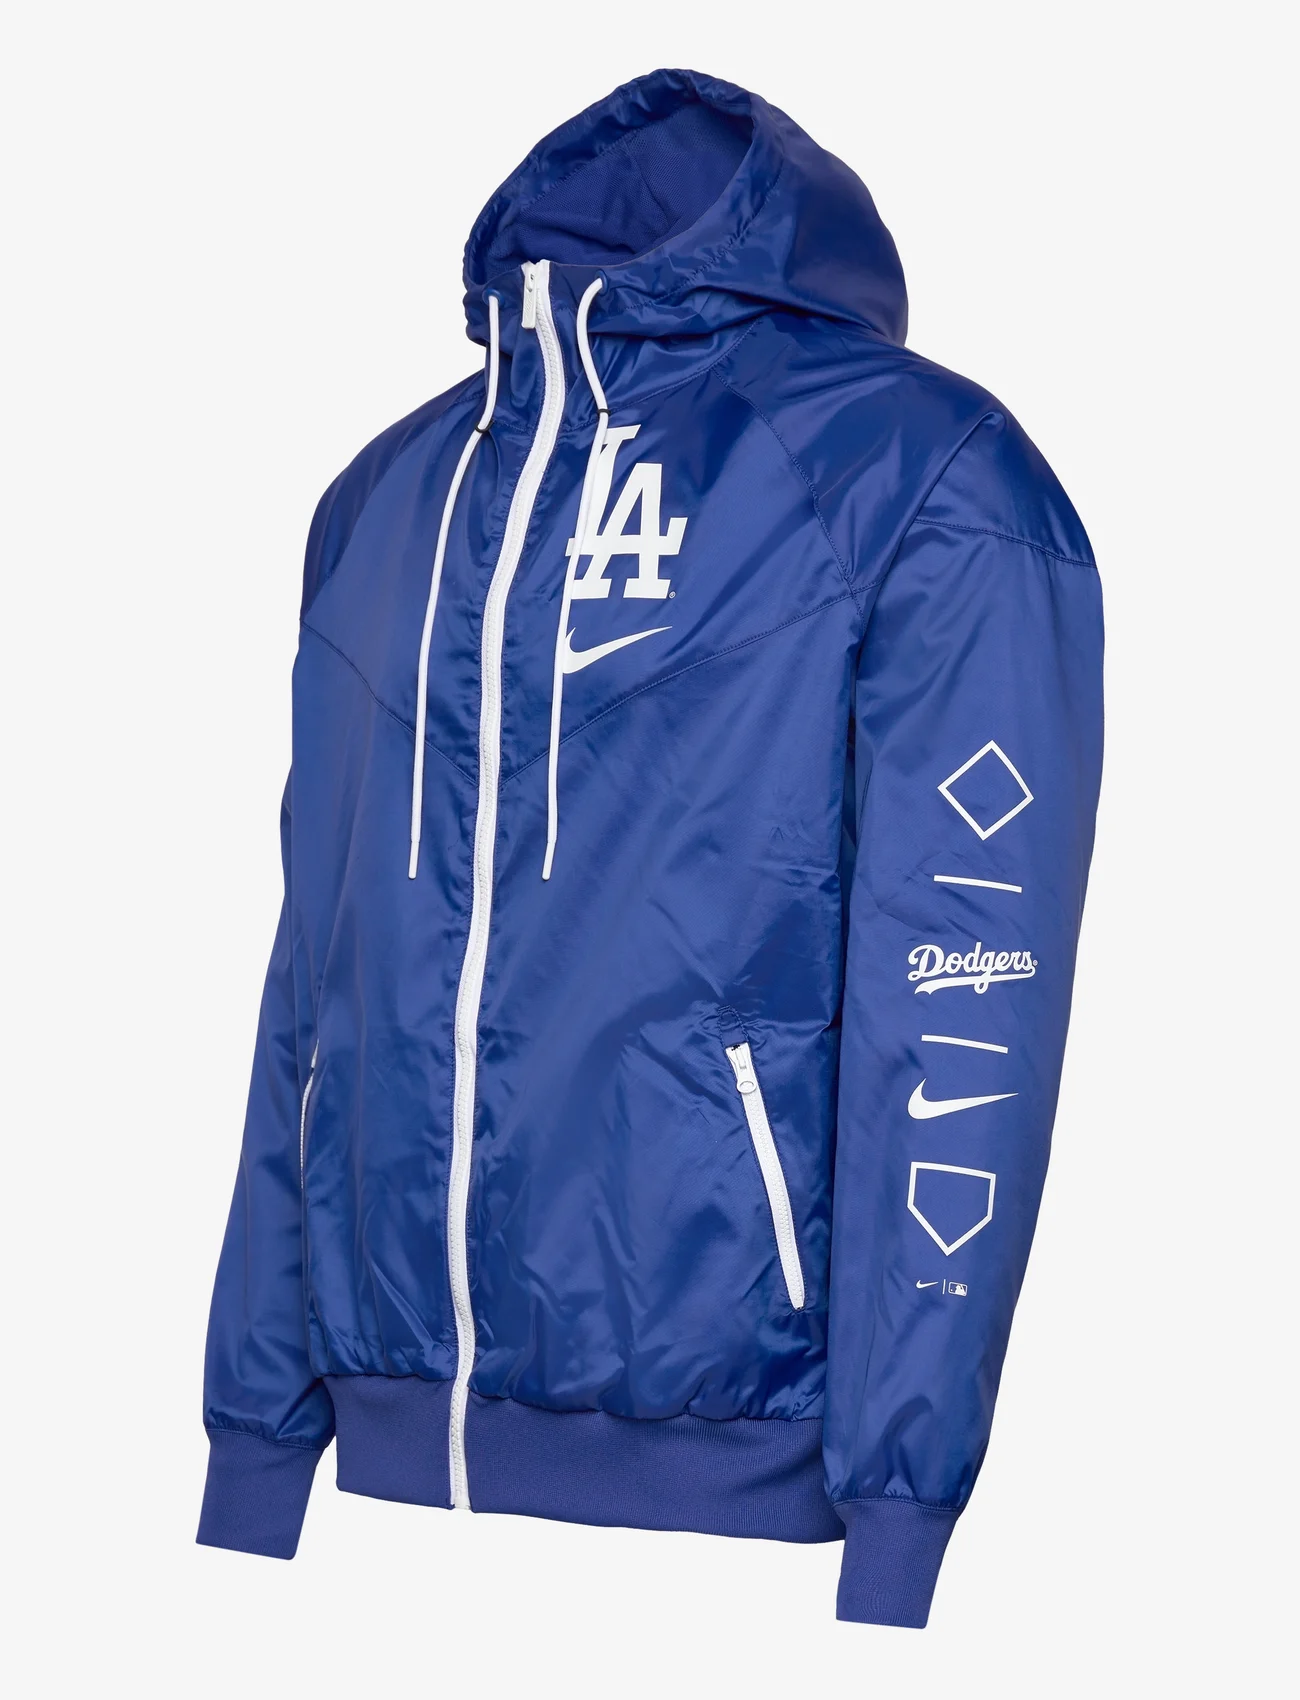 NIKE Fan Gear - Los Angeles Dodgers Men's Nike Team Runner Windrunner Jacket - vēja necaurlaidīgas jakas - rush blue, rush blue, white - 1